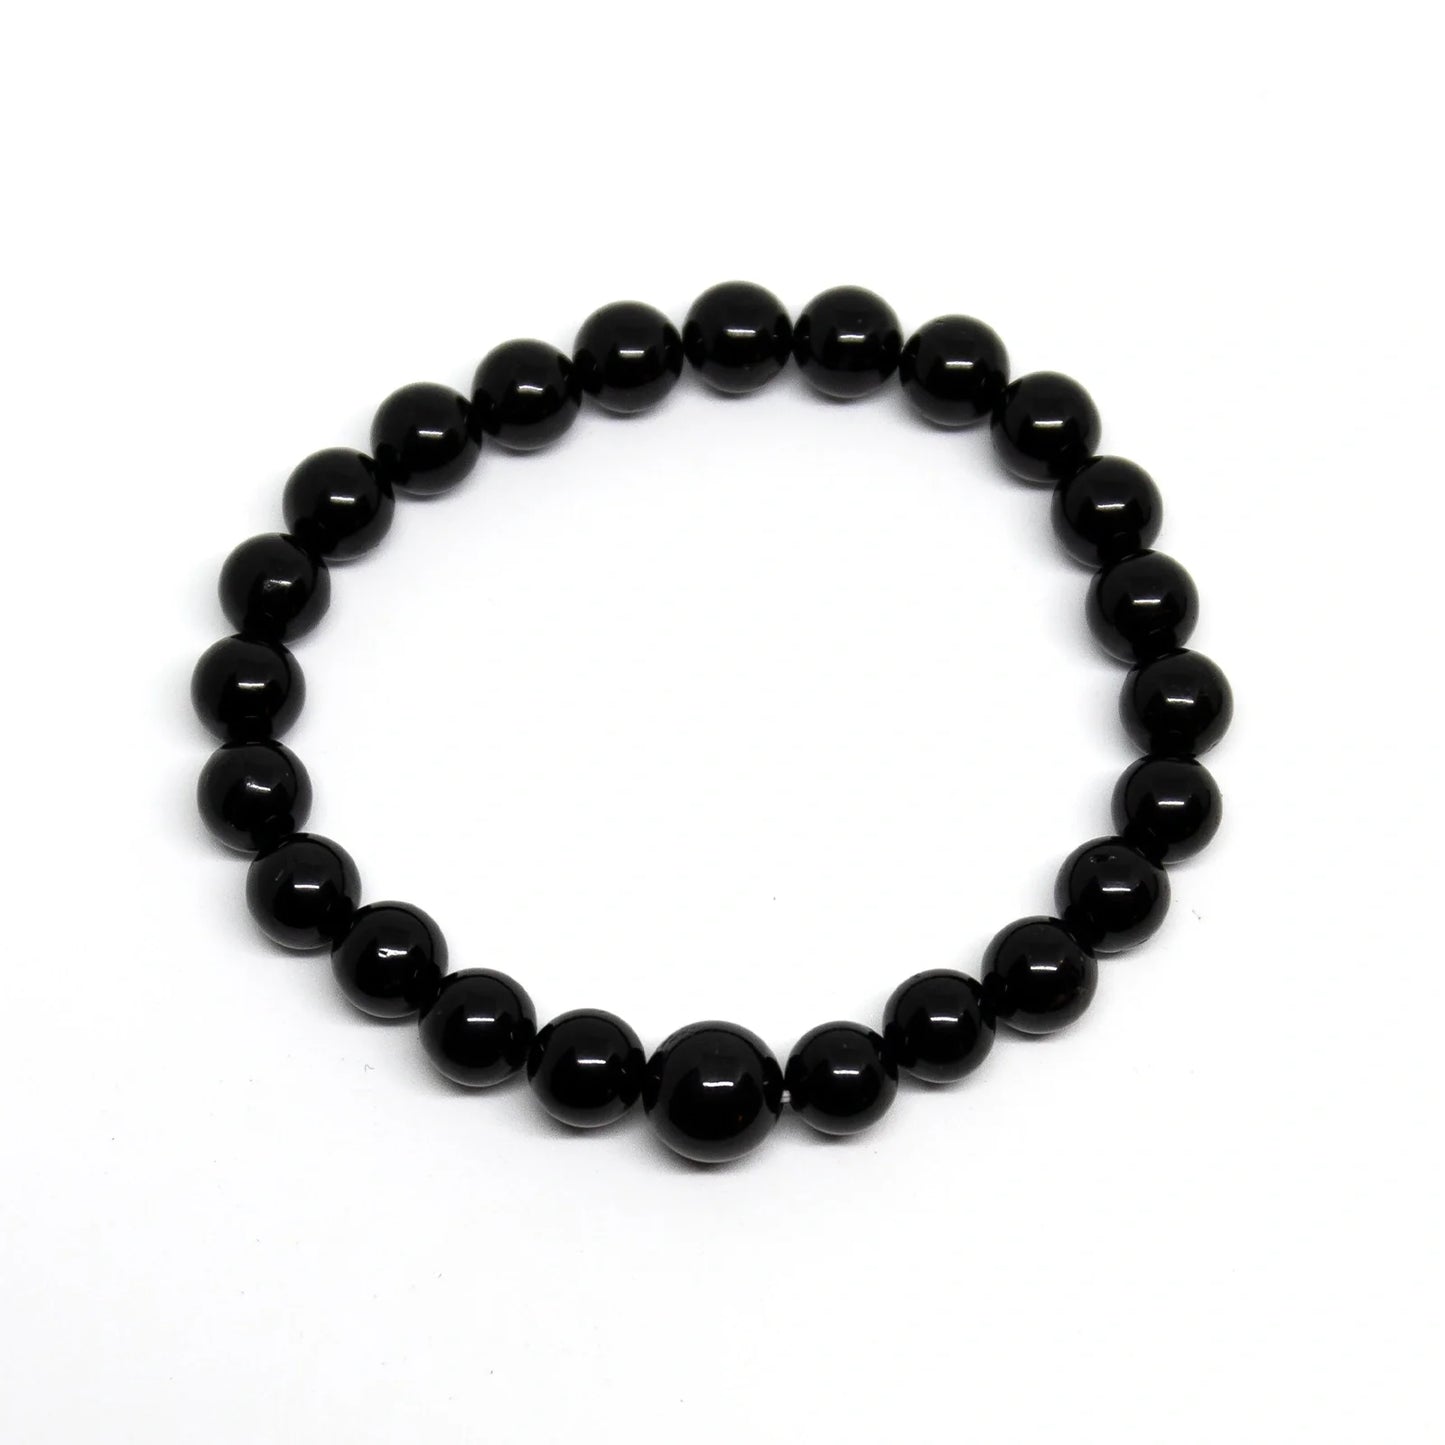 Black Obsidian Stretchy Beaded Bracelet - Wrist Mala 6mm (6 Pack) - Large Wrists